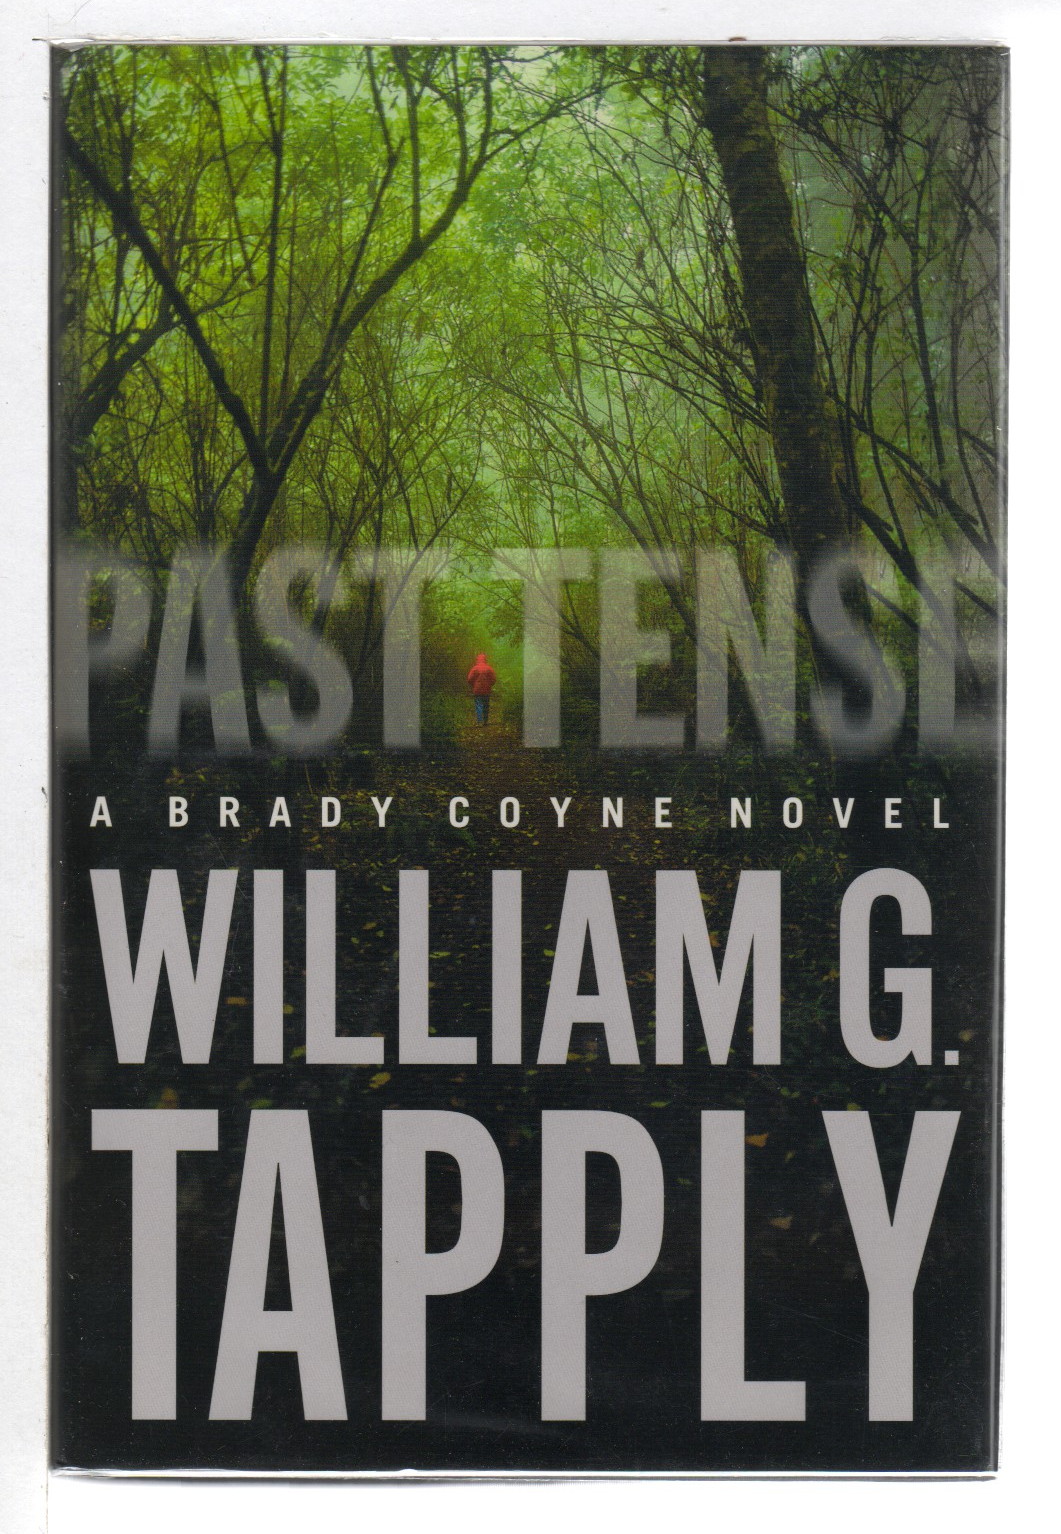 PAST TENSE: A Brady Coyne Novel. - Tapply, William G.